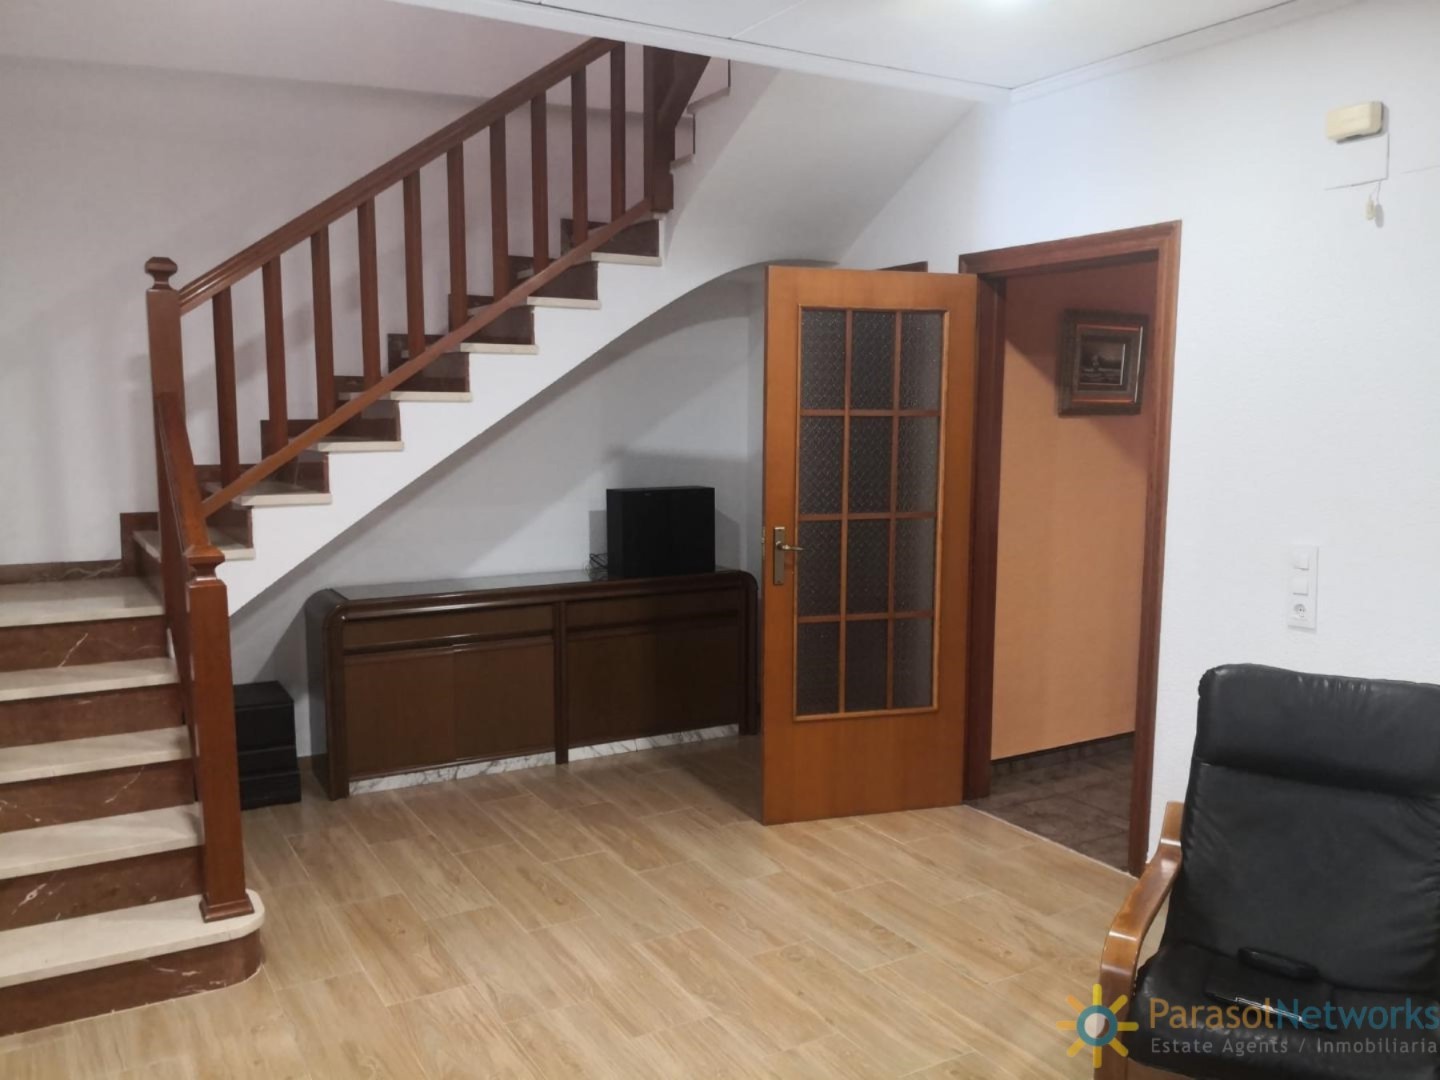 House for sale in Villalonga- Ref:2019